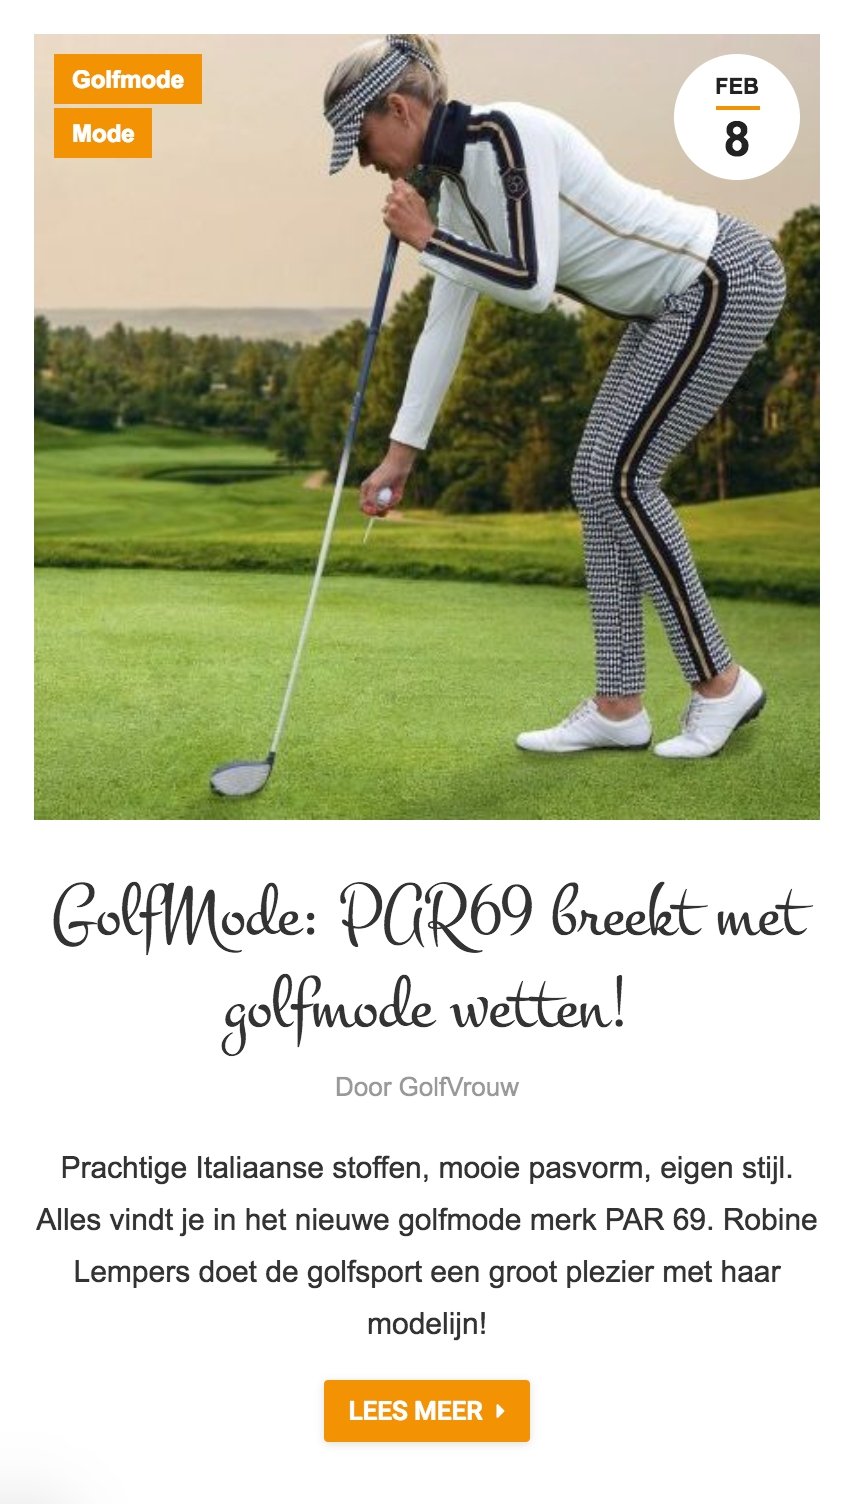 GolfVrouw: "PAR69 breekt golfmode wetten"